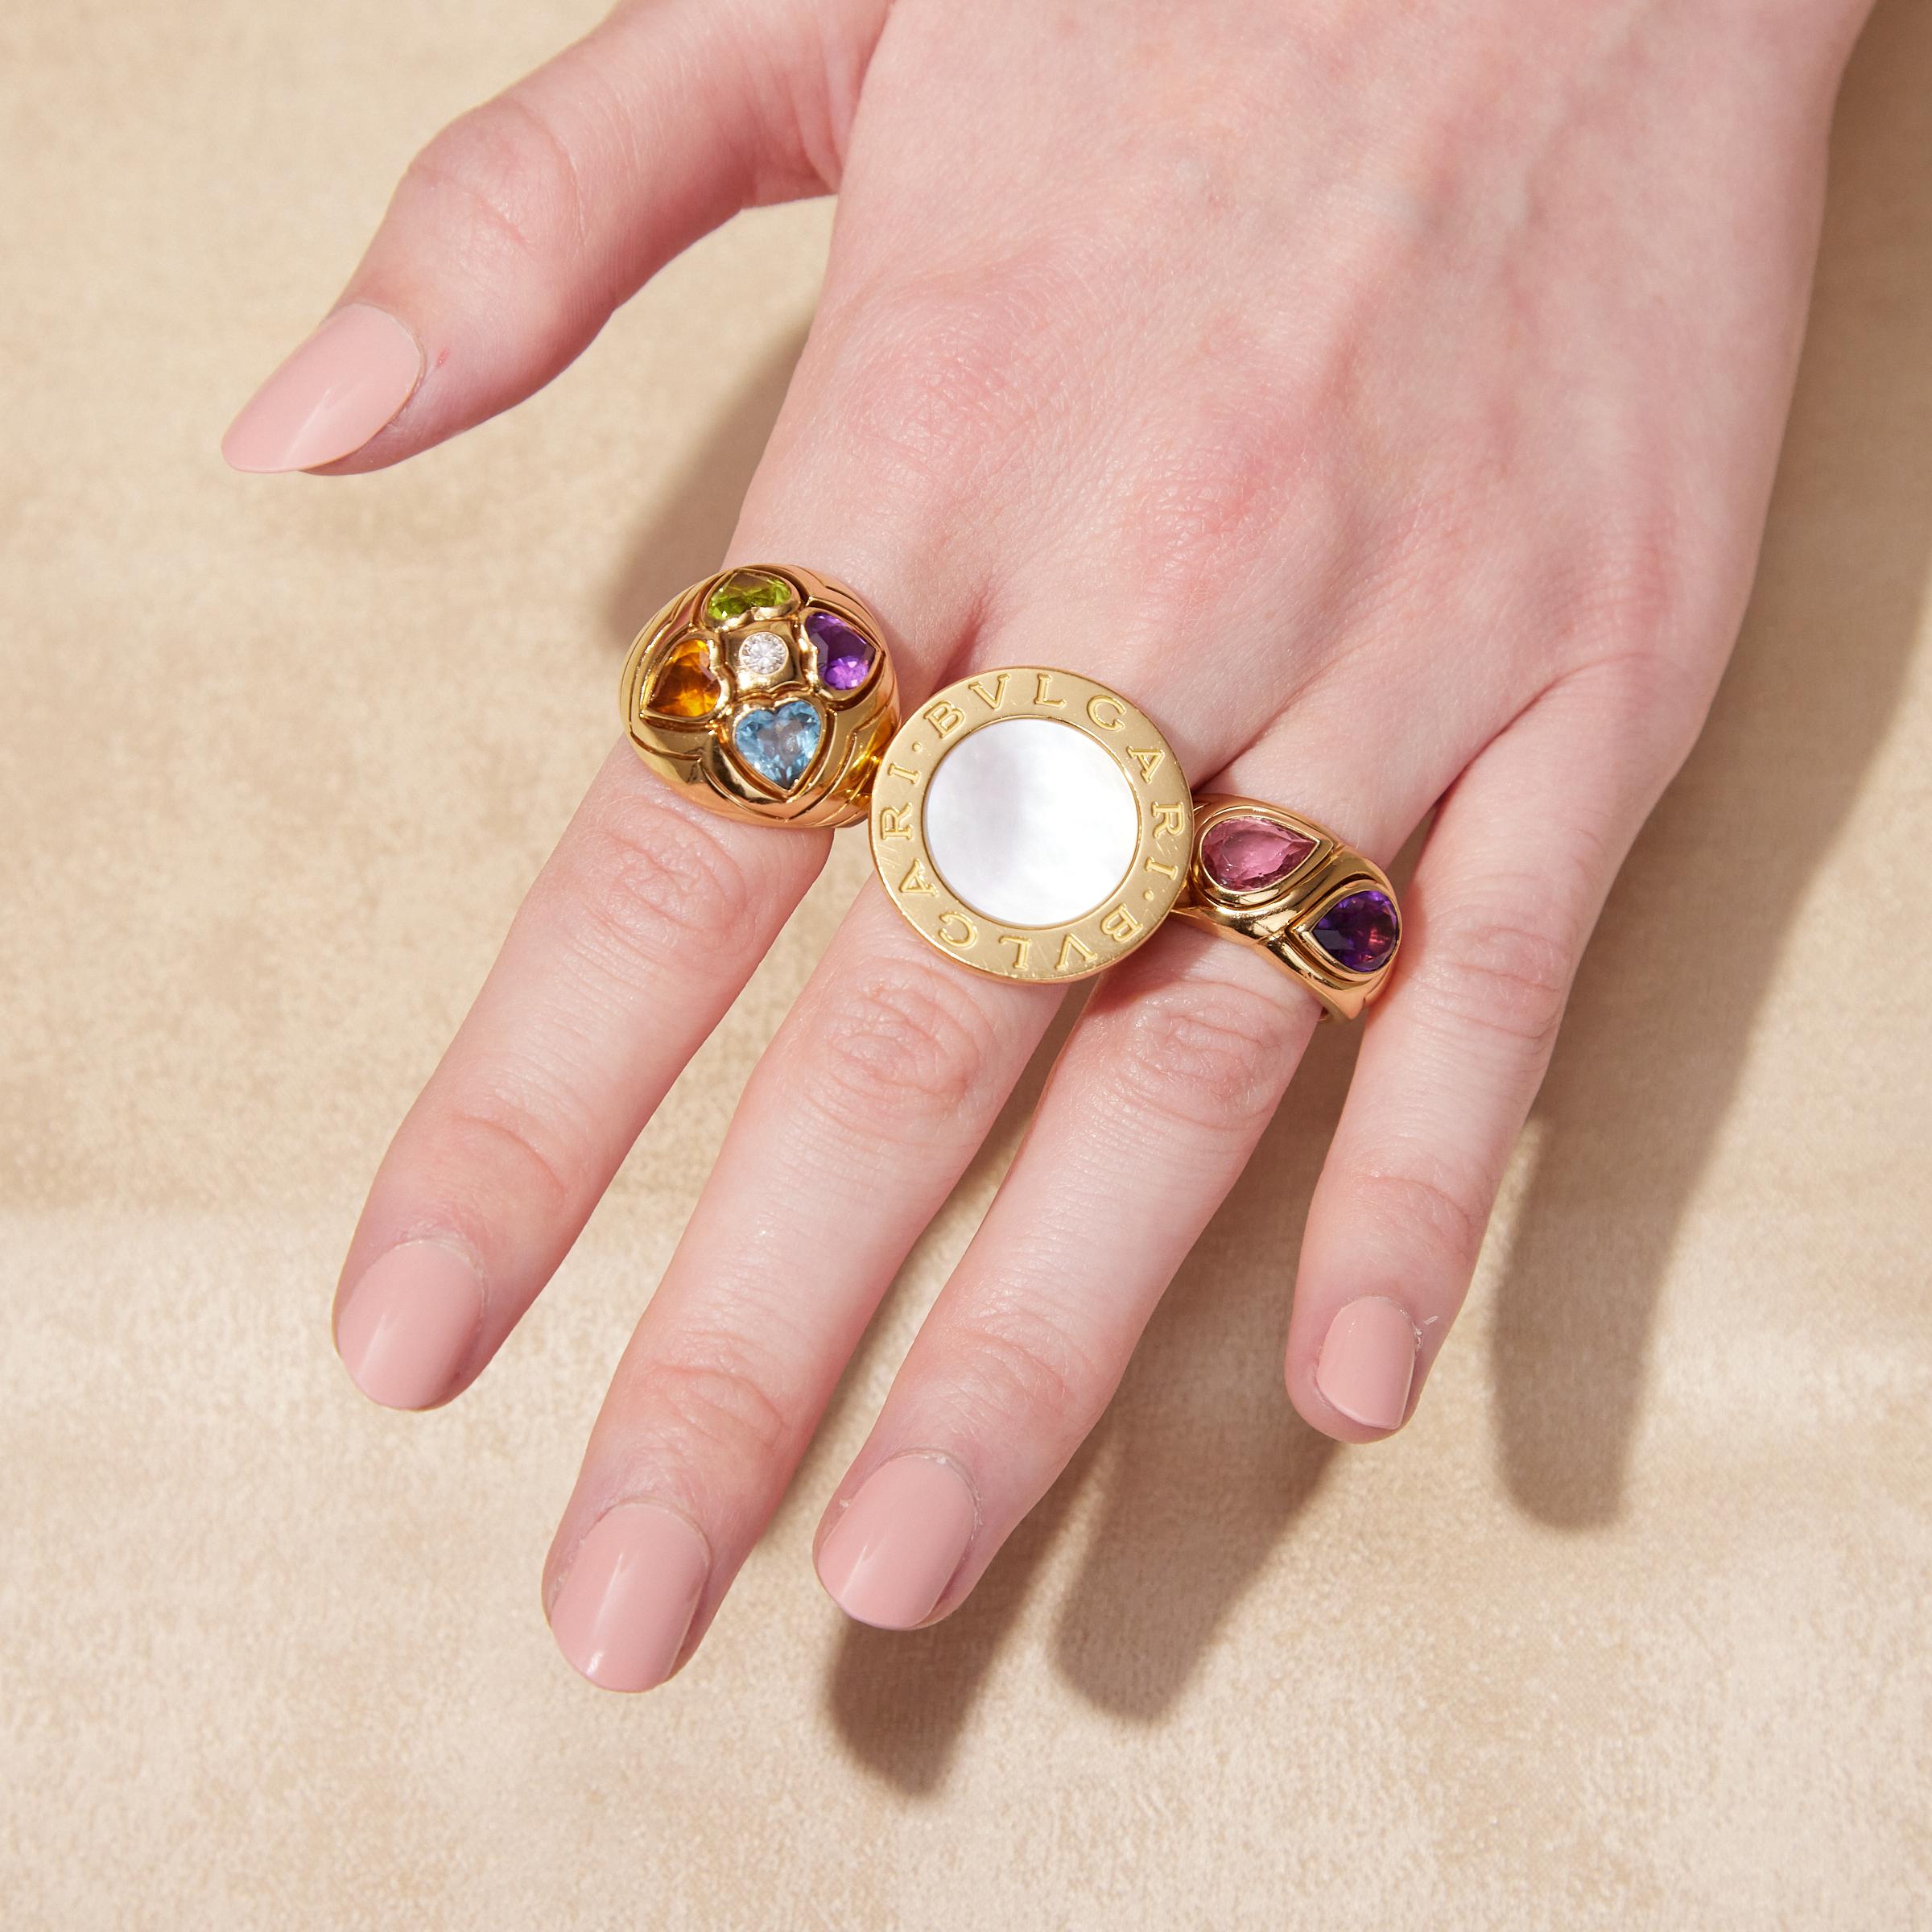 Bulgari 'Bvlgari Bvlgari' Mother of Pearl Large Version Ring in 18K Yellow Gold For Sale 1